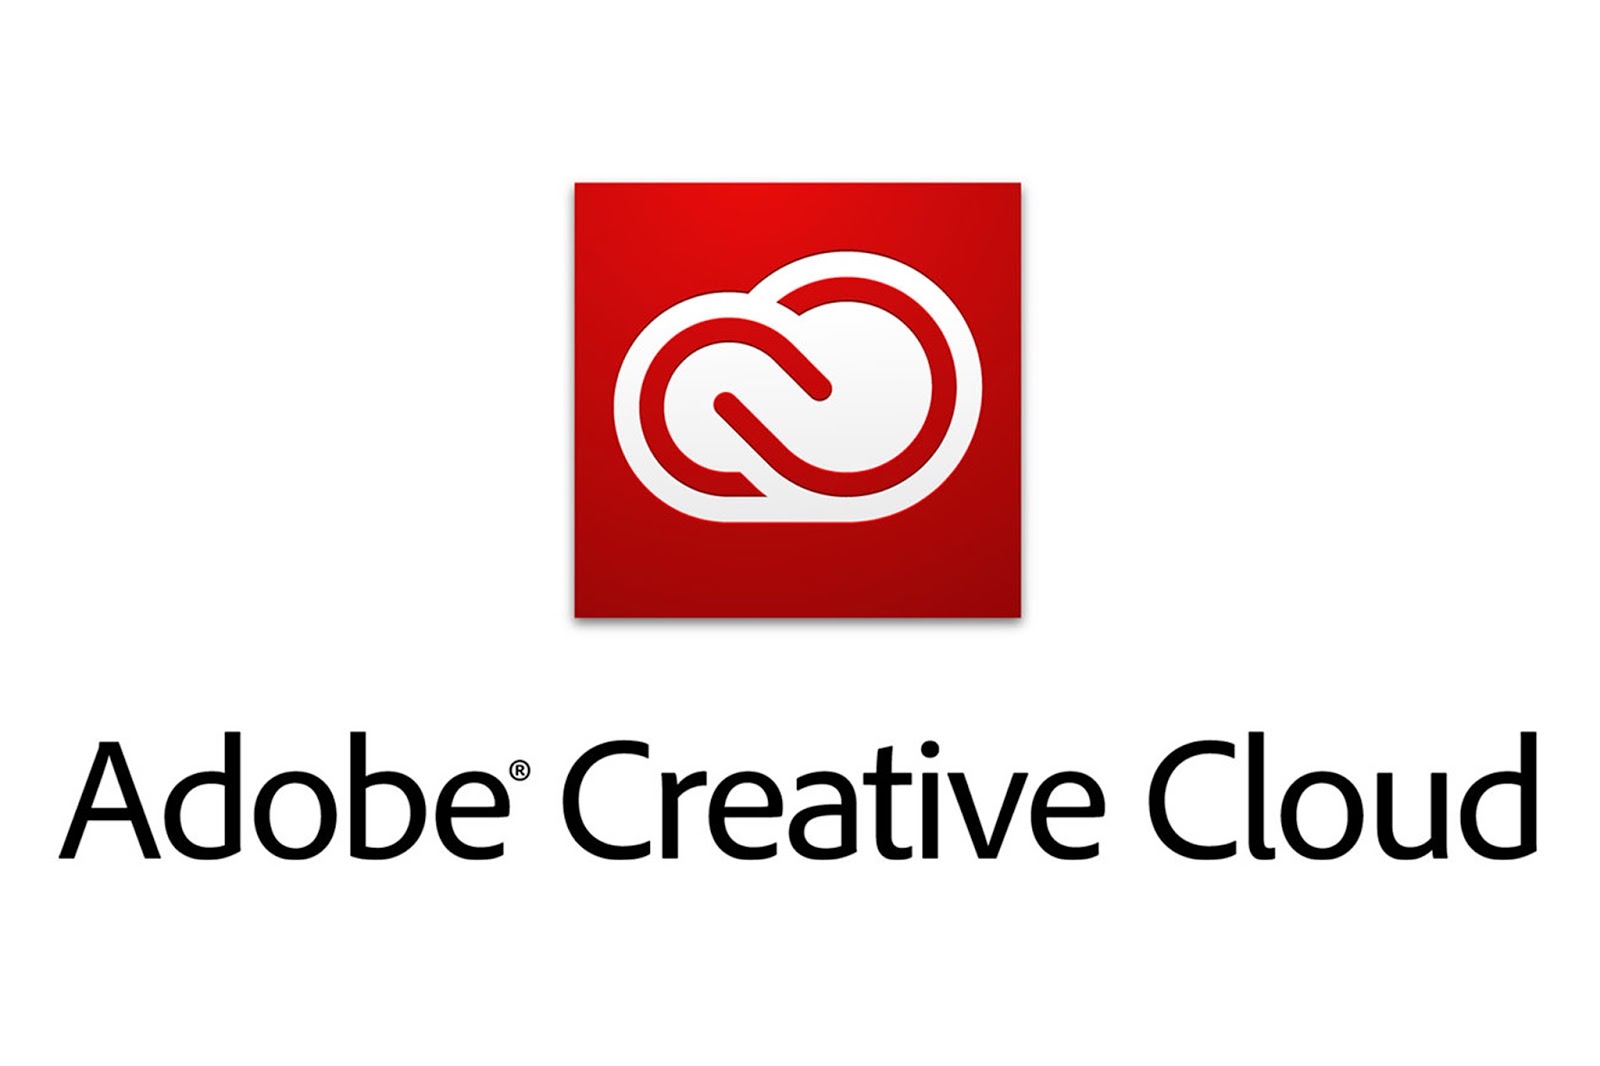 Adobe creative download. Adobe Creative cloud. Adobe Photoshop Creative cloud. Логотип Creative cloud. Adobe Creative cloud картинки.